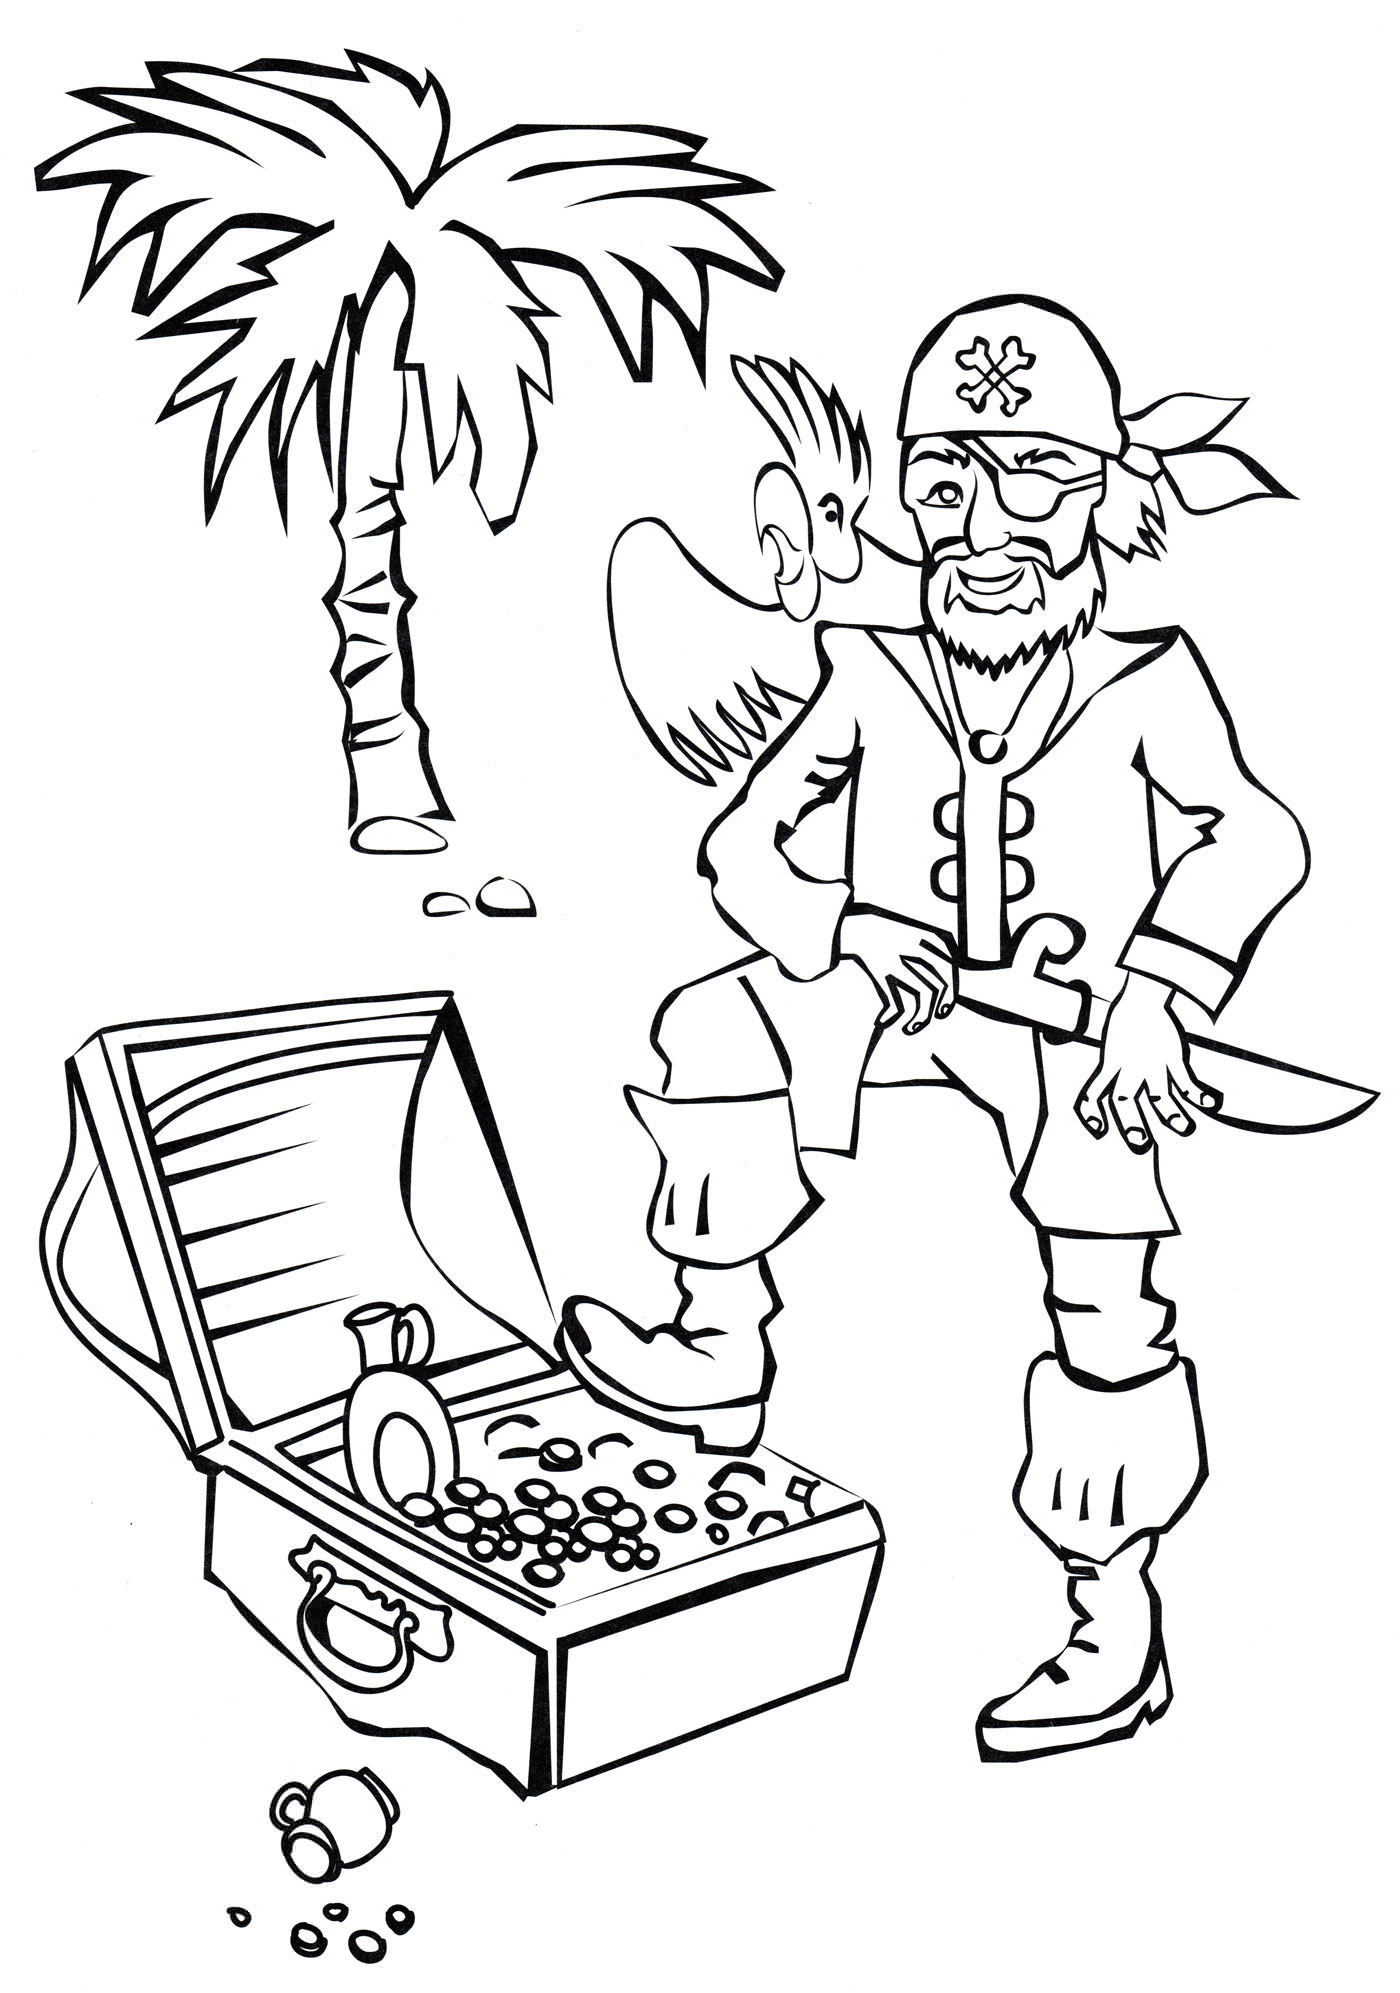 Розмальовка Пірат і скриня зі скарбами